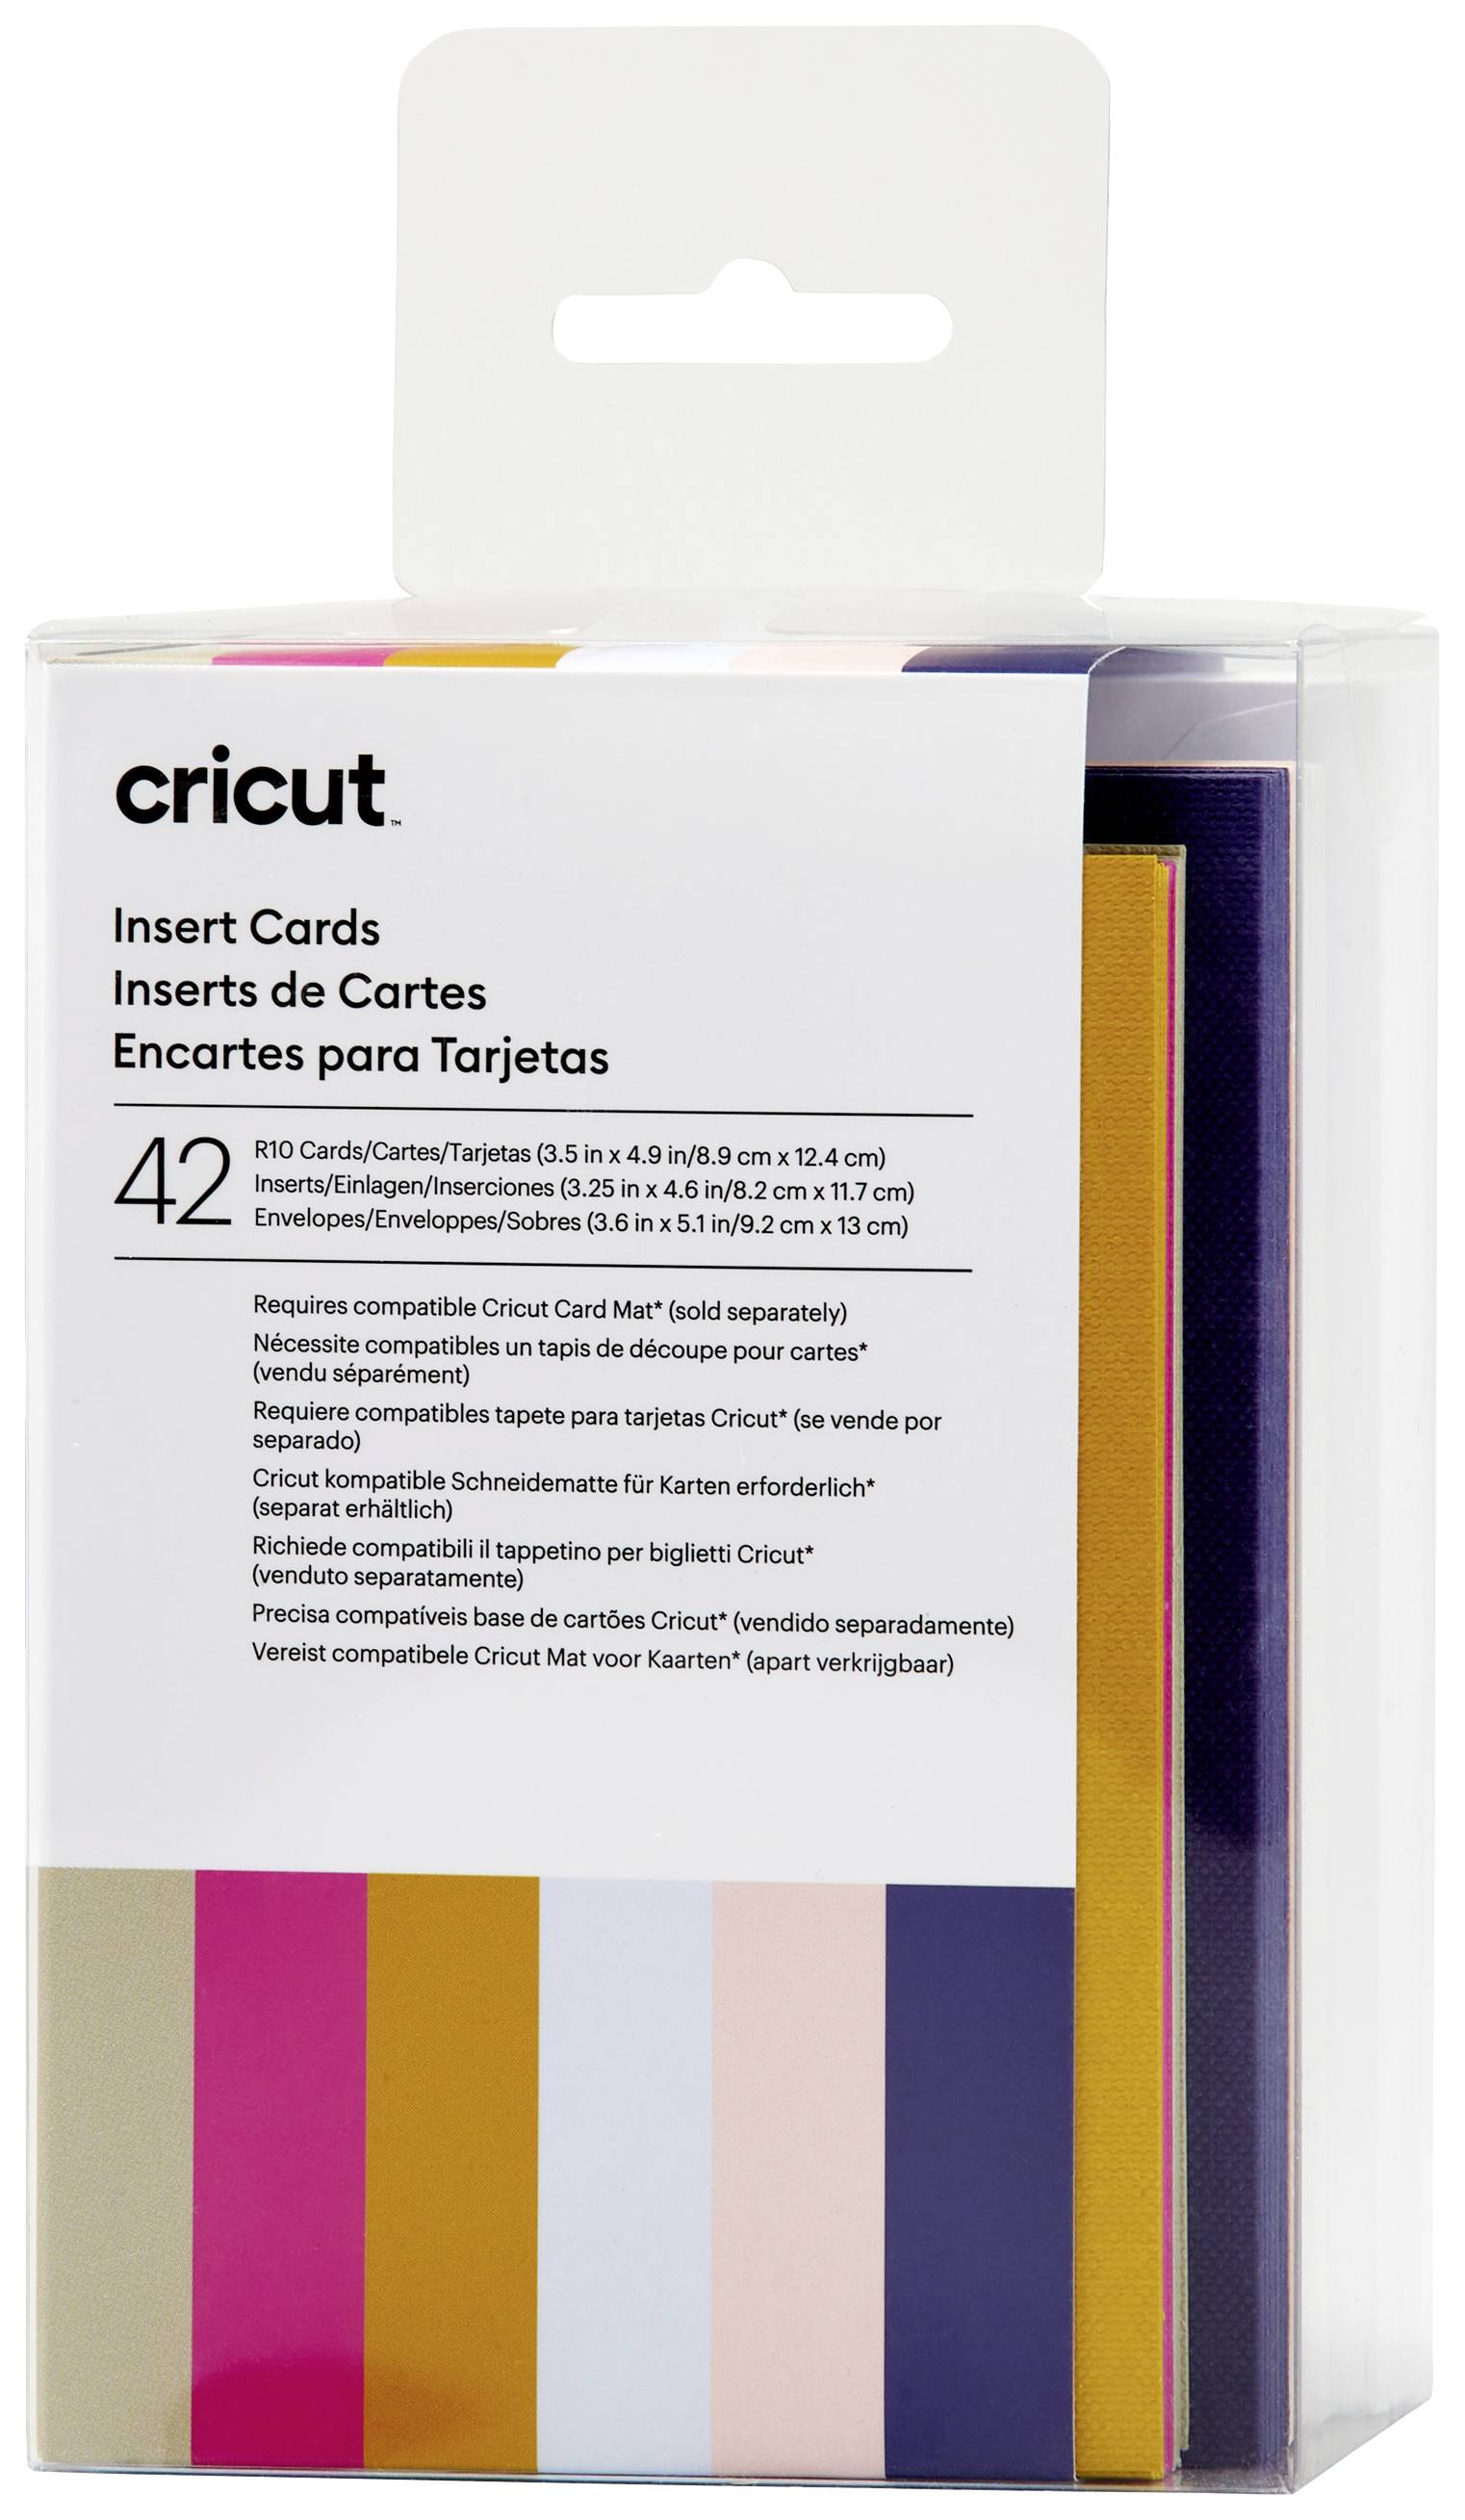 Buy Cricut Insert Cards Sensei R10 Card set Tulip blue, Powder